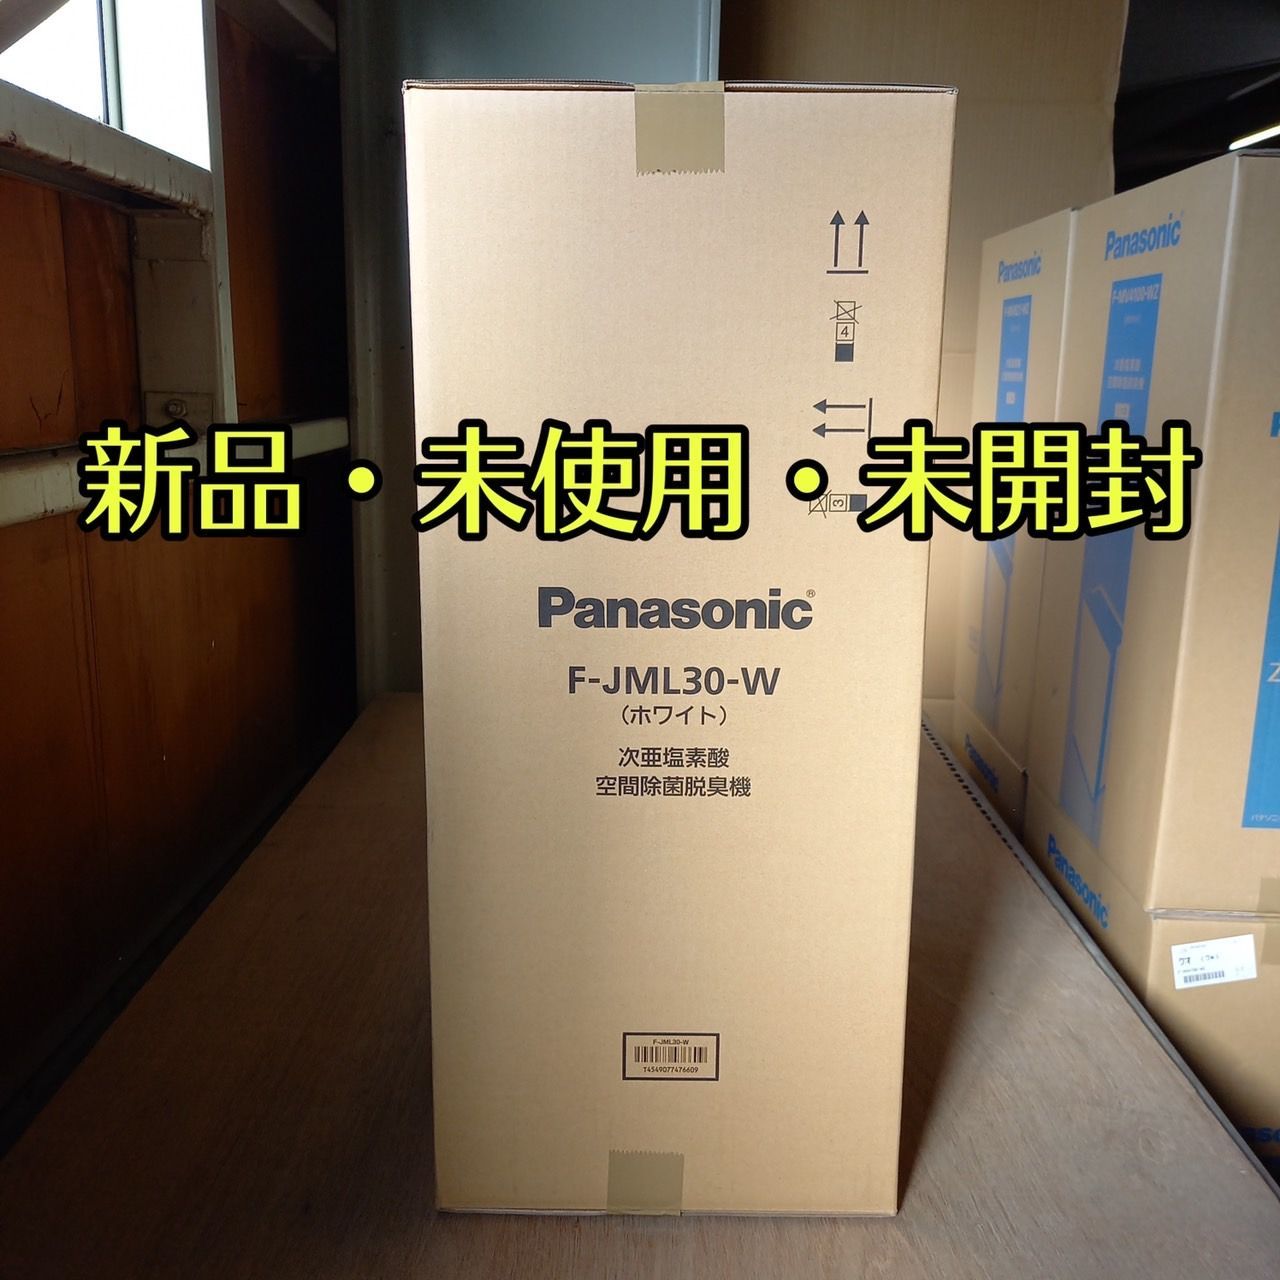 Panasonic F-JML30-W 未使用品 クリアランス超安い www